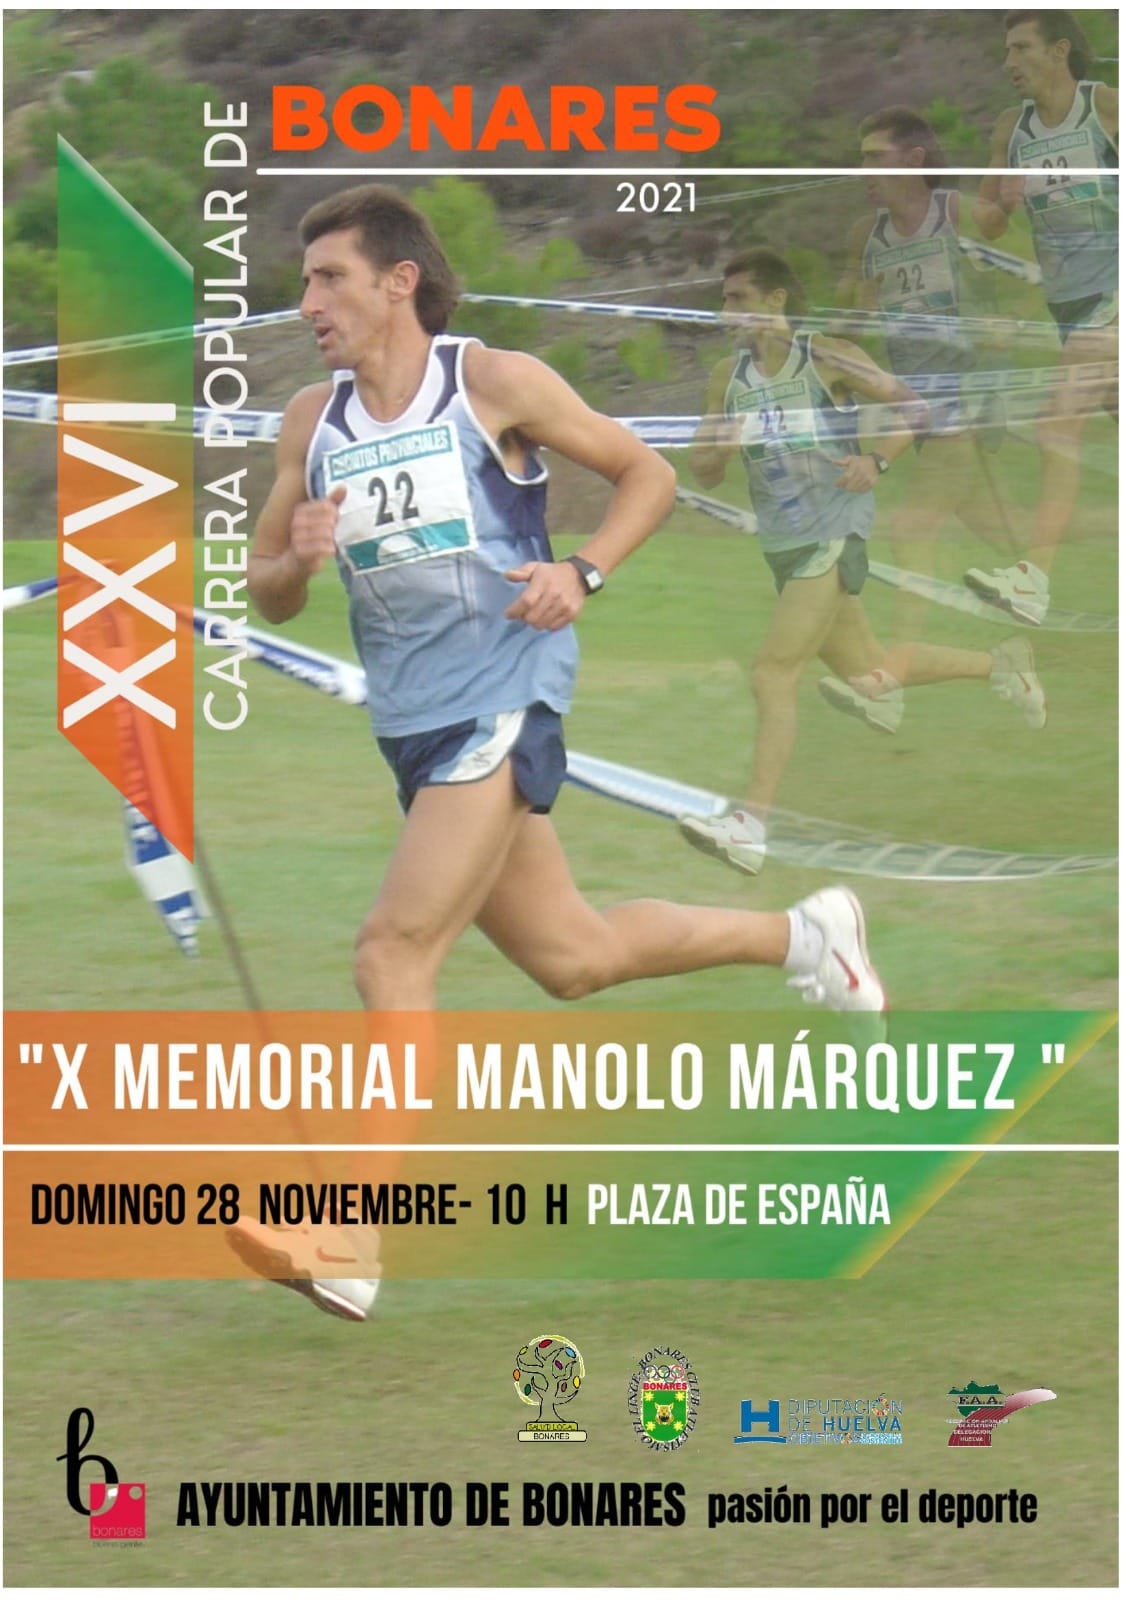 Carrera popular de Bonares “X Memorial Manolo Márquez”